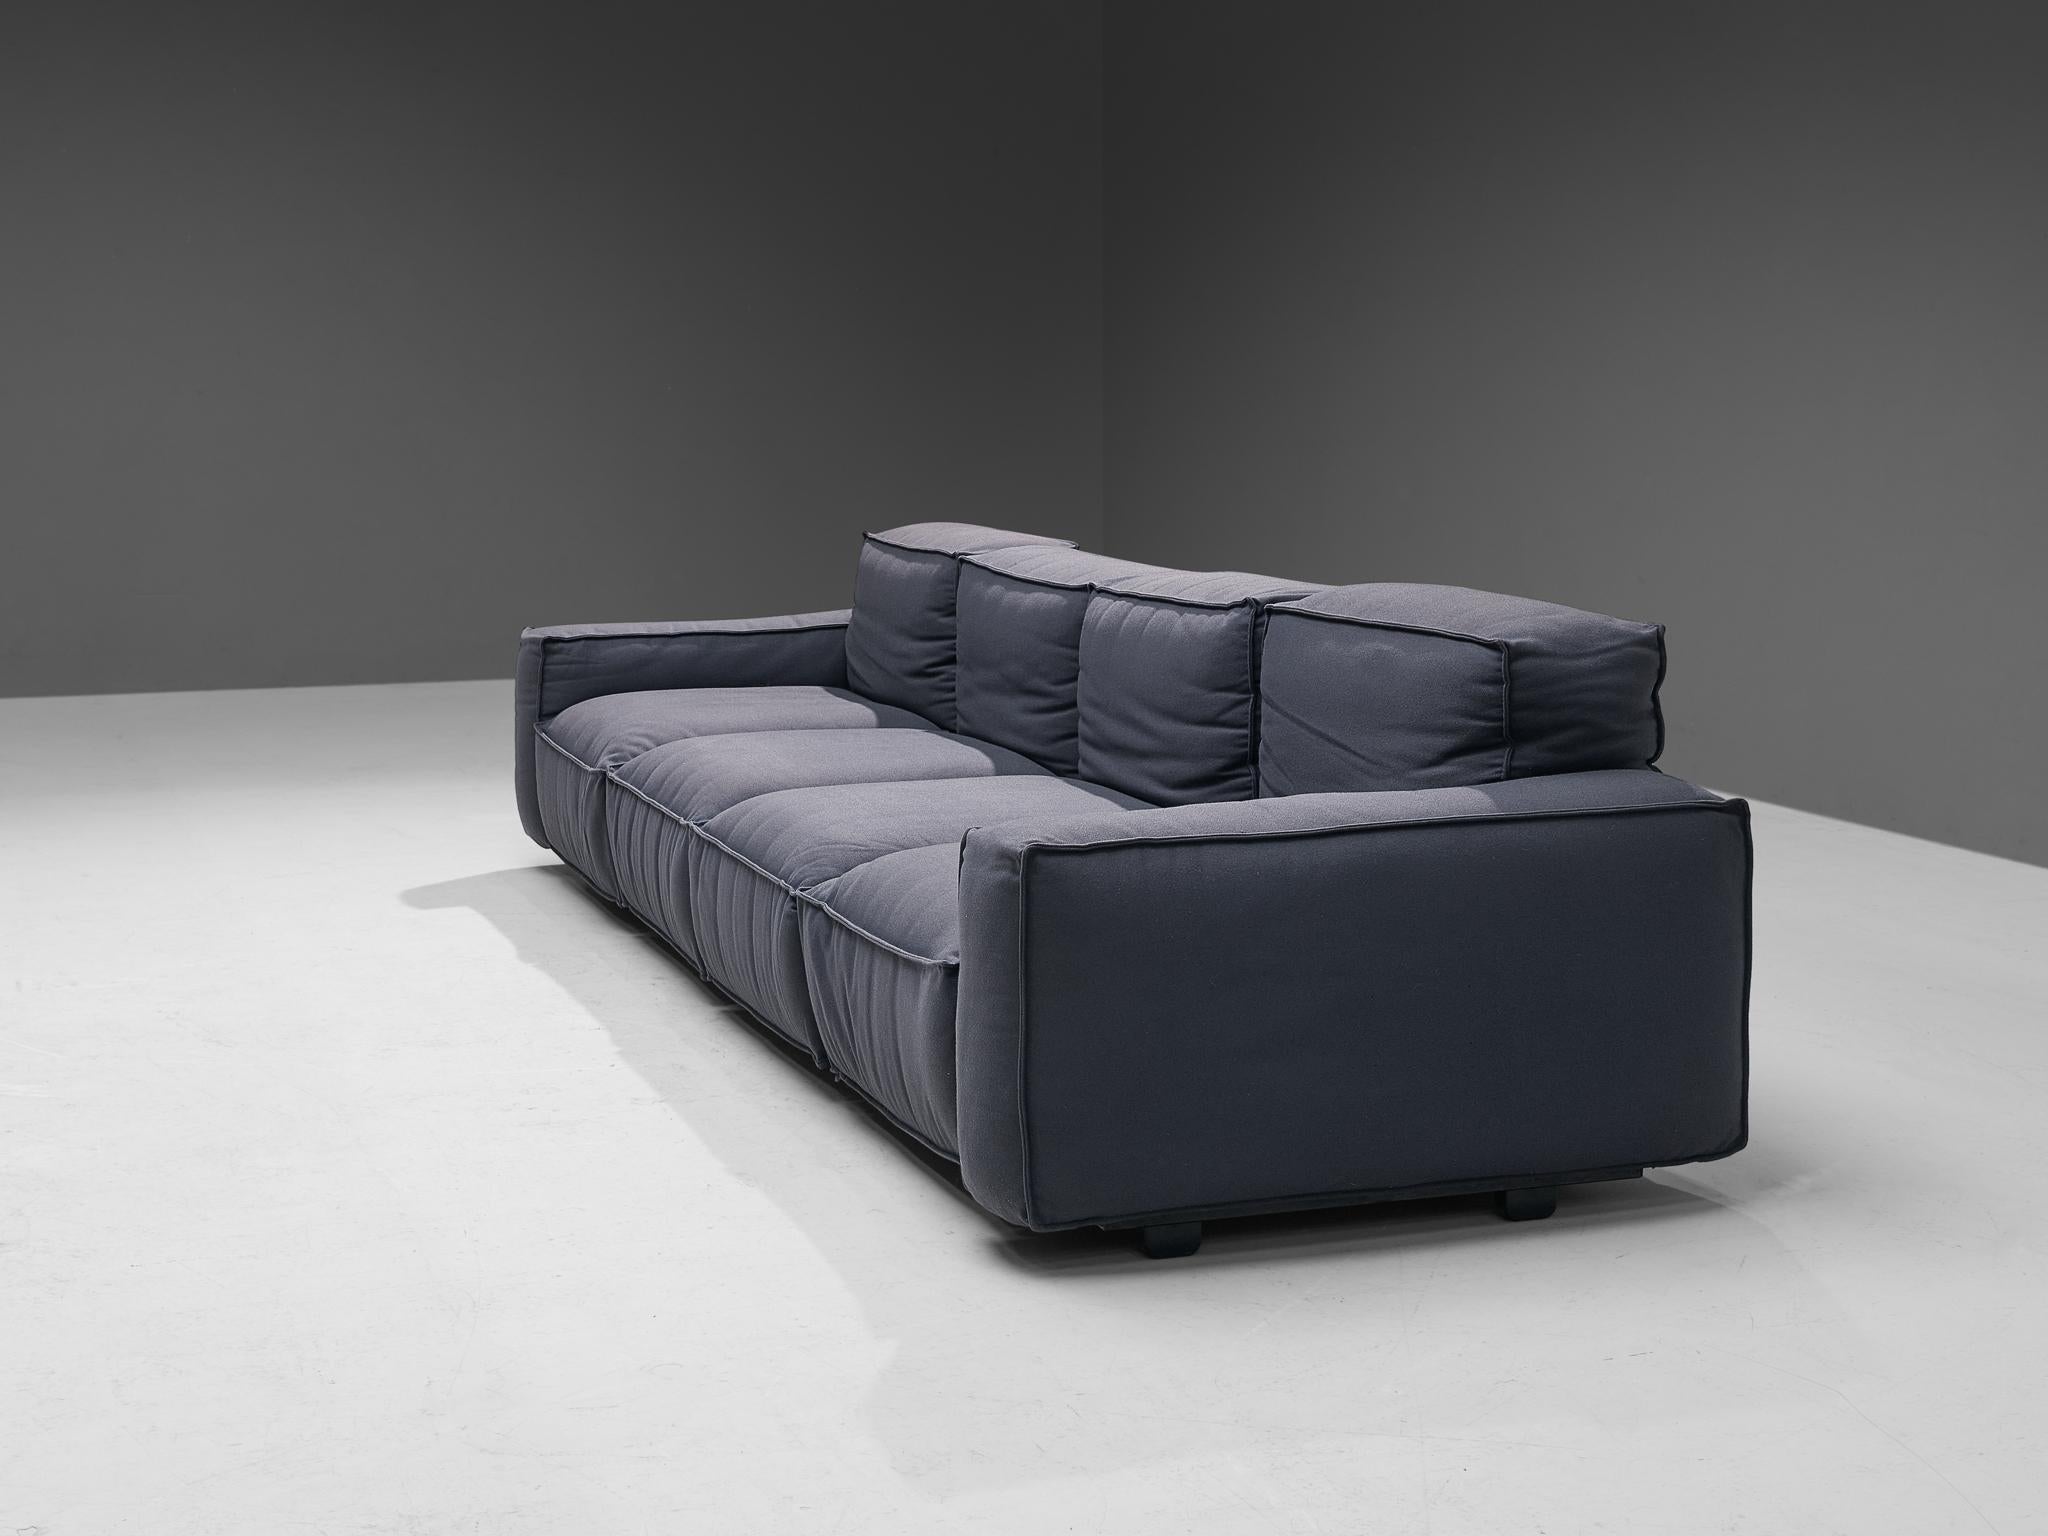 Mario Marenco for Arflex 'Marechiaro' Sofas in Blue Woolen Upholstery  2